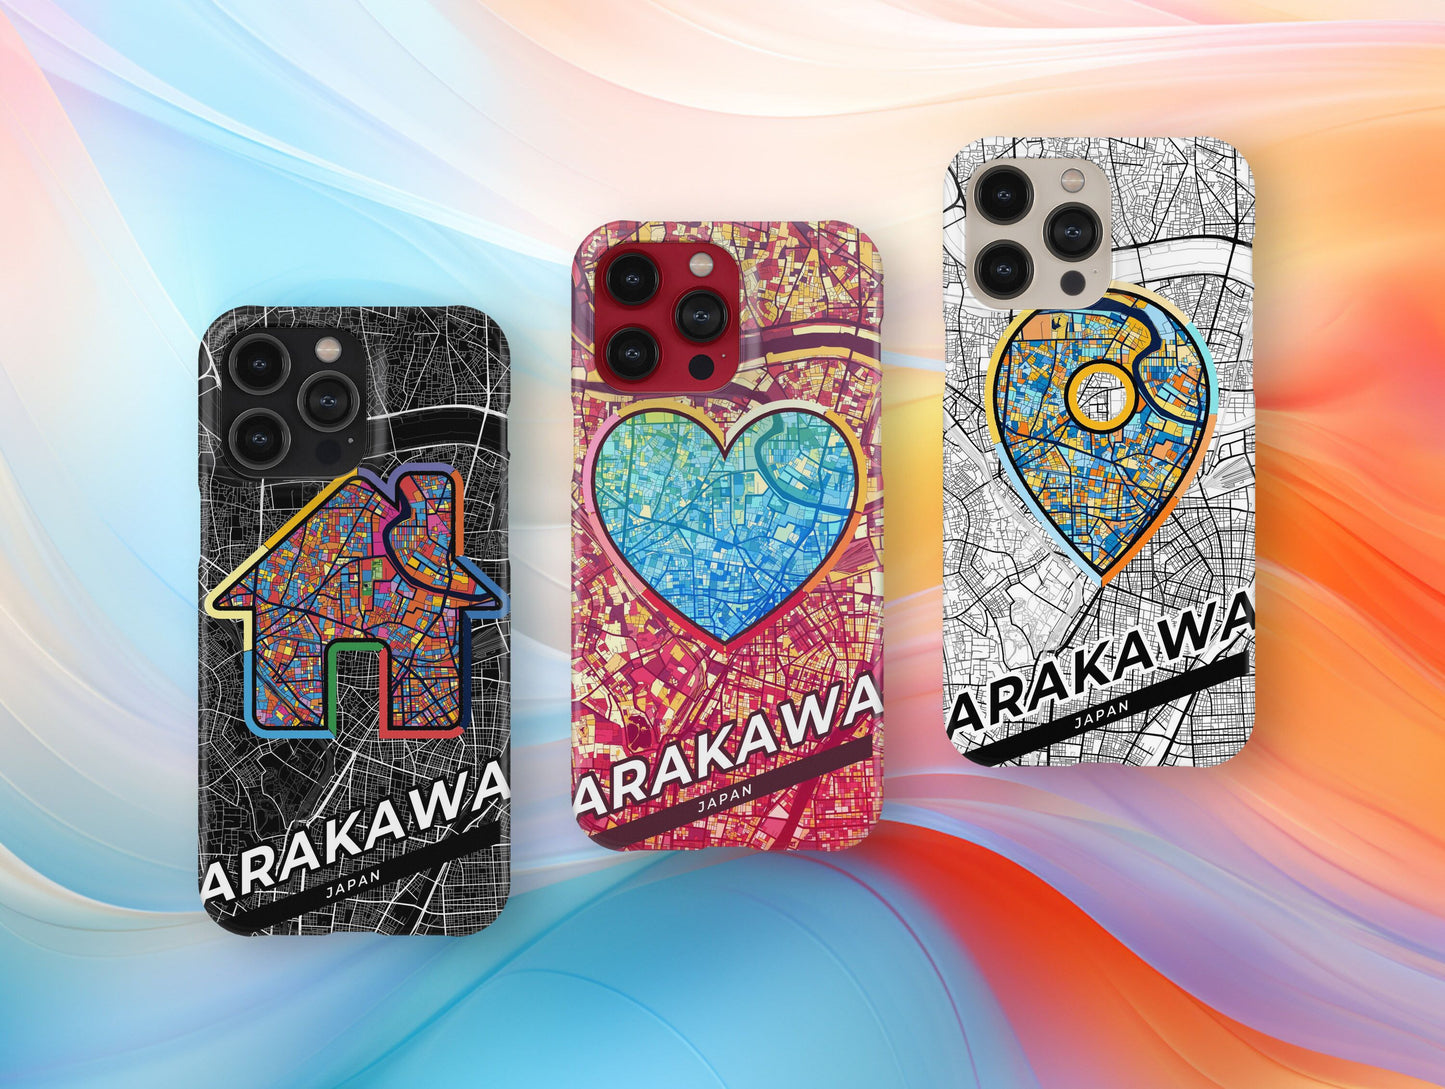 Arakawa Japan slim phone case with colorful icon. Birthday, wedding or housewarming gift. Couple match cases.